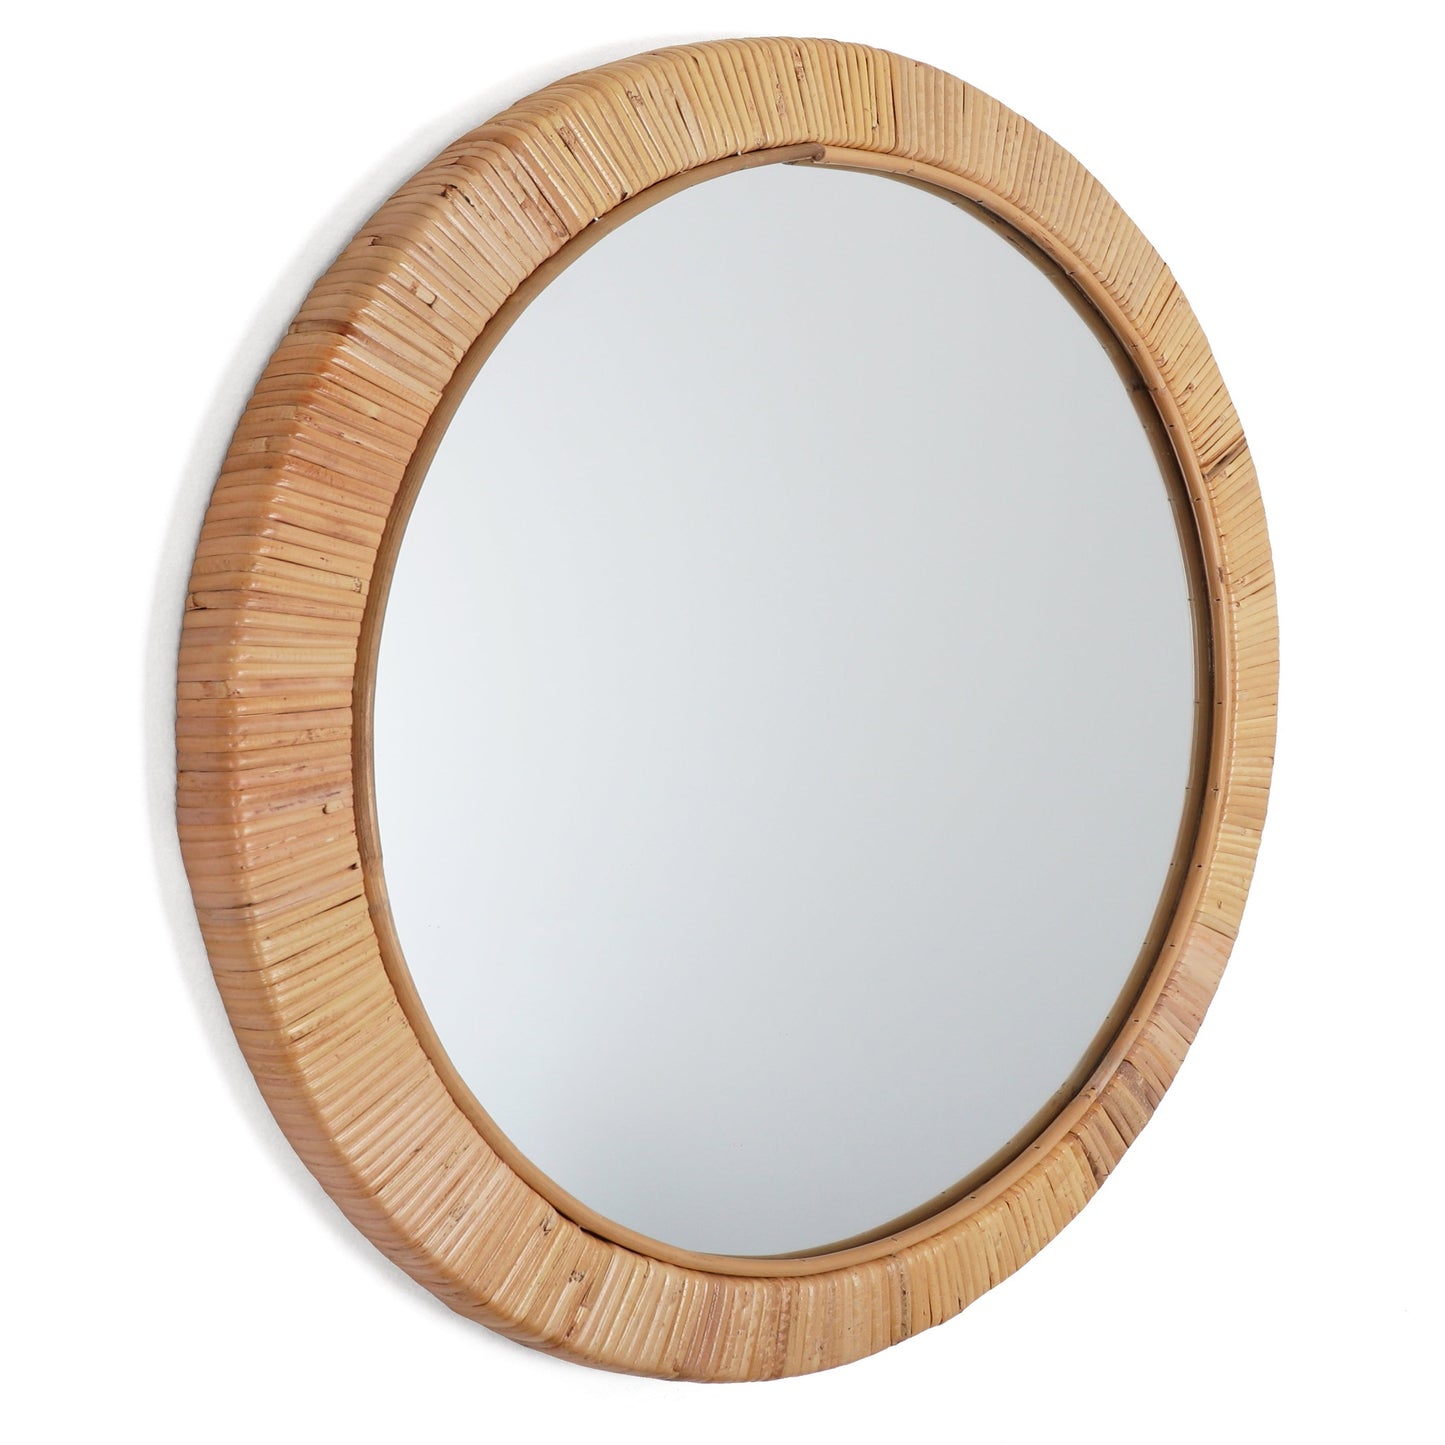 Seaside Wooden Mirror - Large